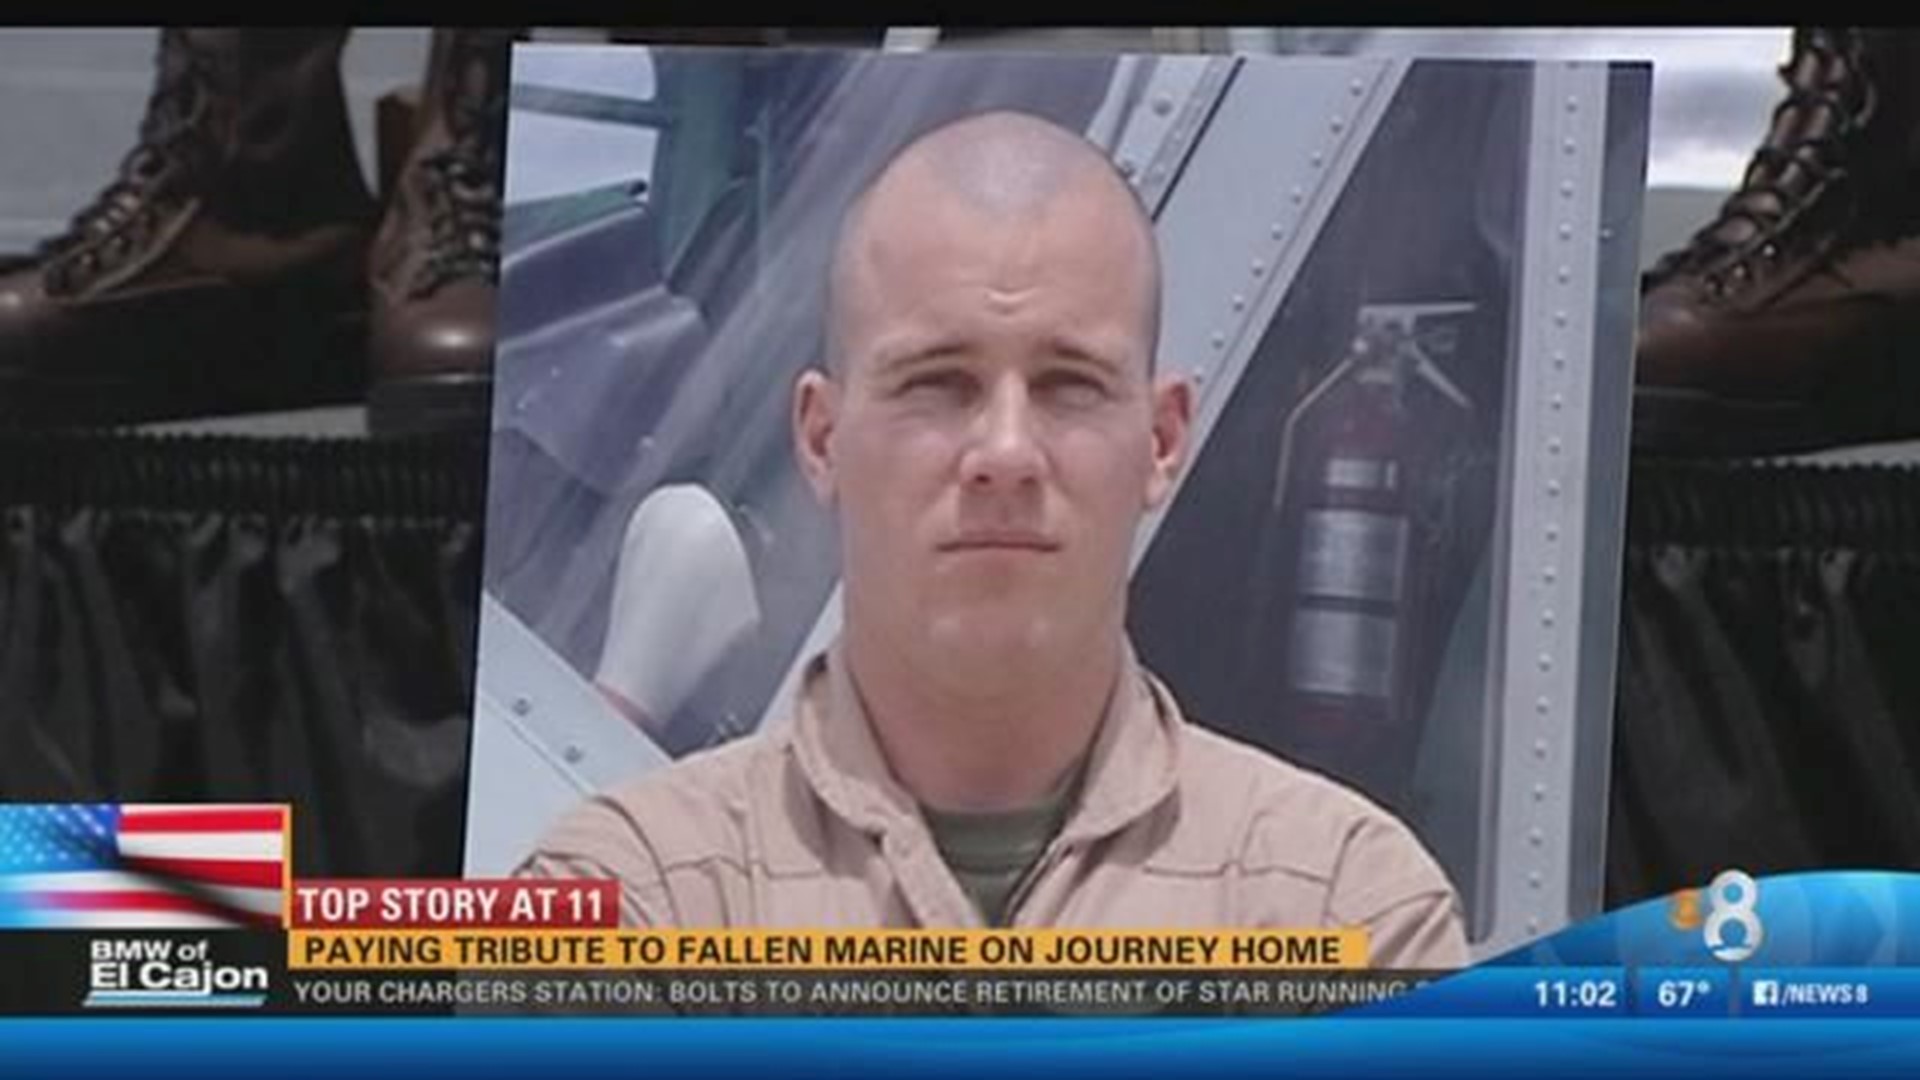 Final journey home for fallen Marine | cbs8.com